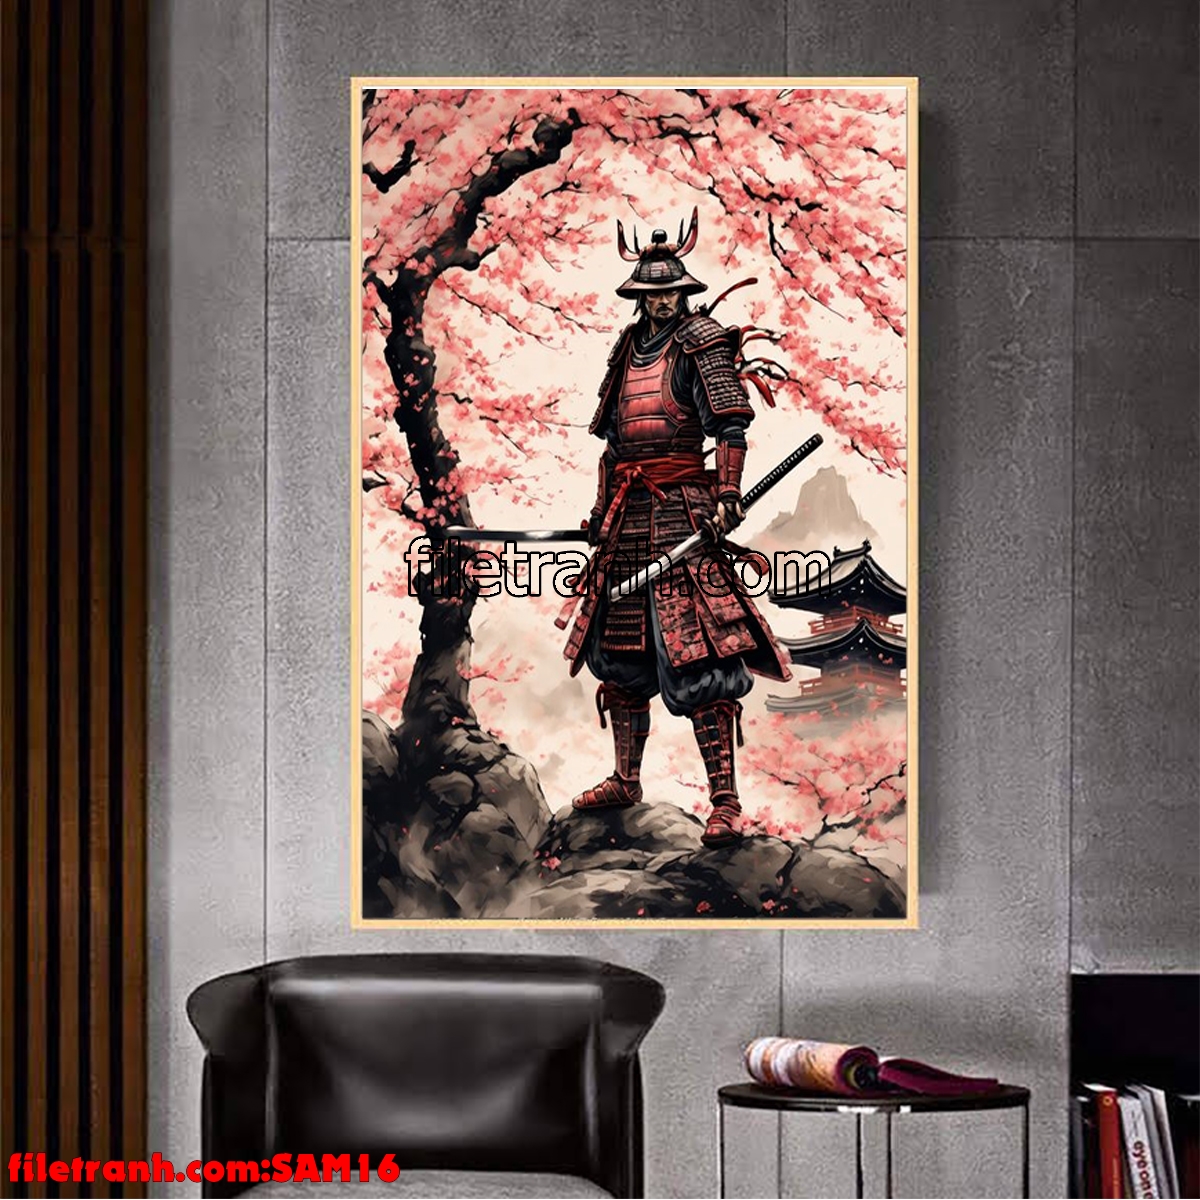 https://filetranh.com/tuong-nen/file-tranh-samurai-vo-si-nhat-ban-sam16.html